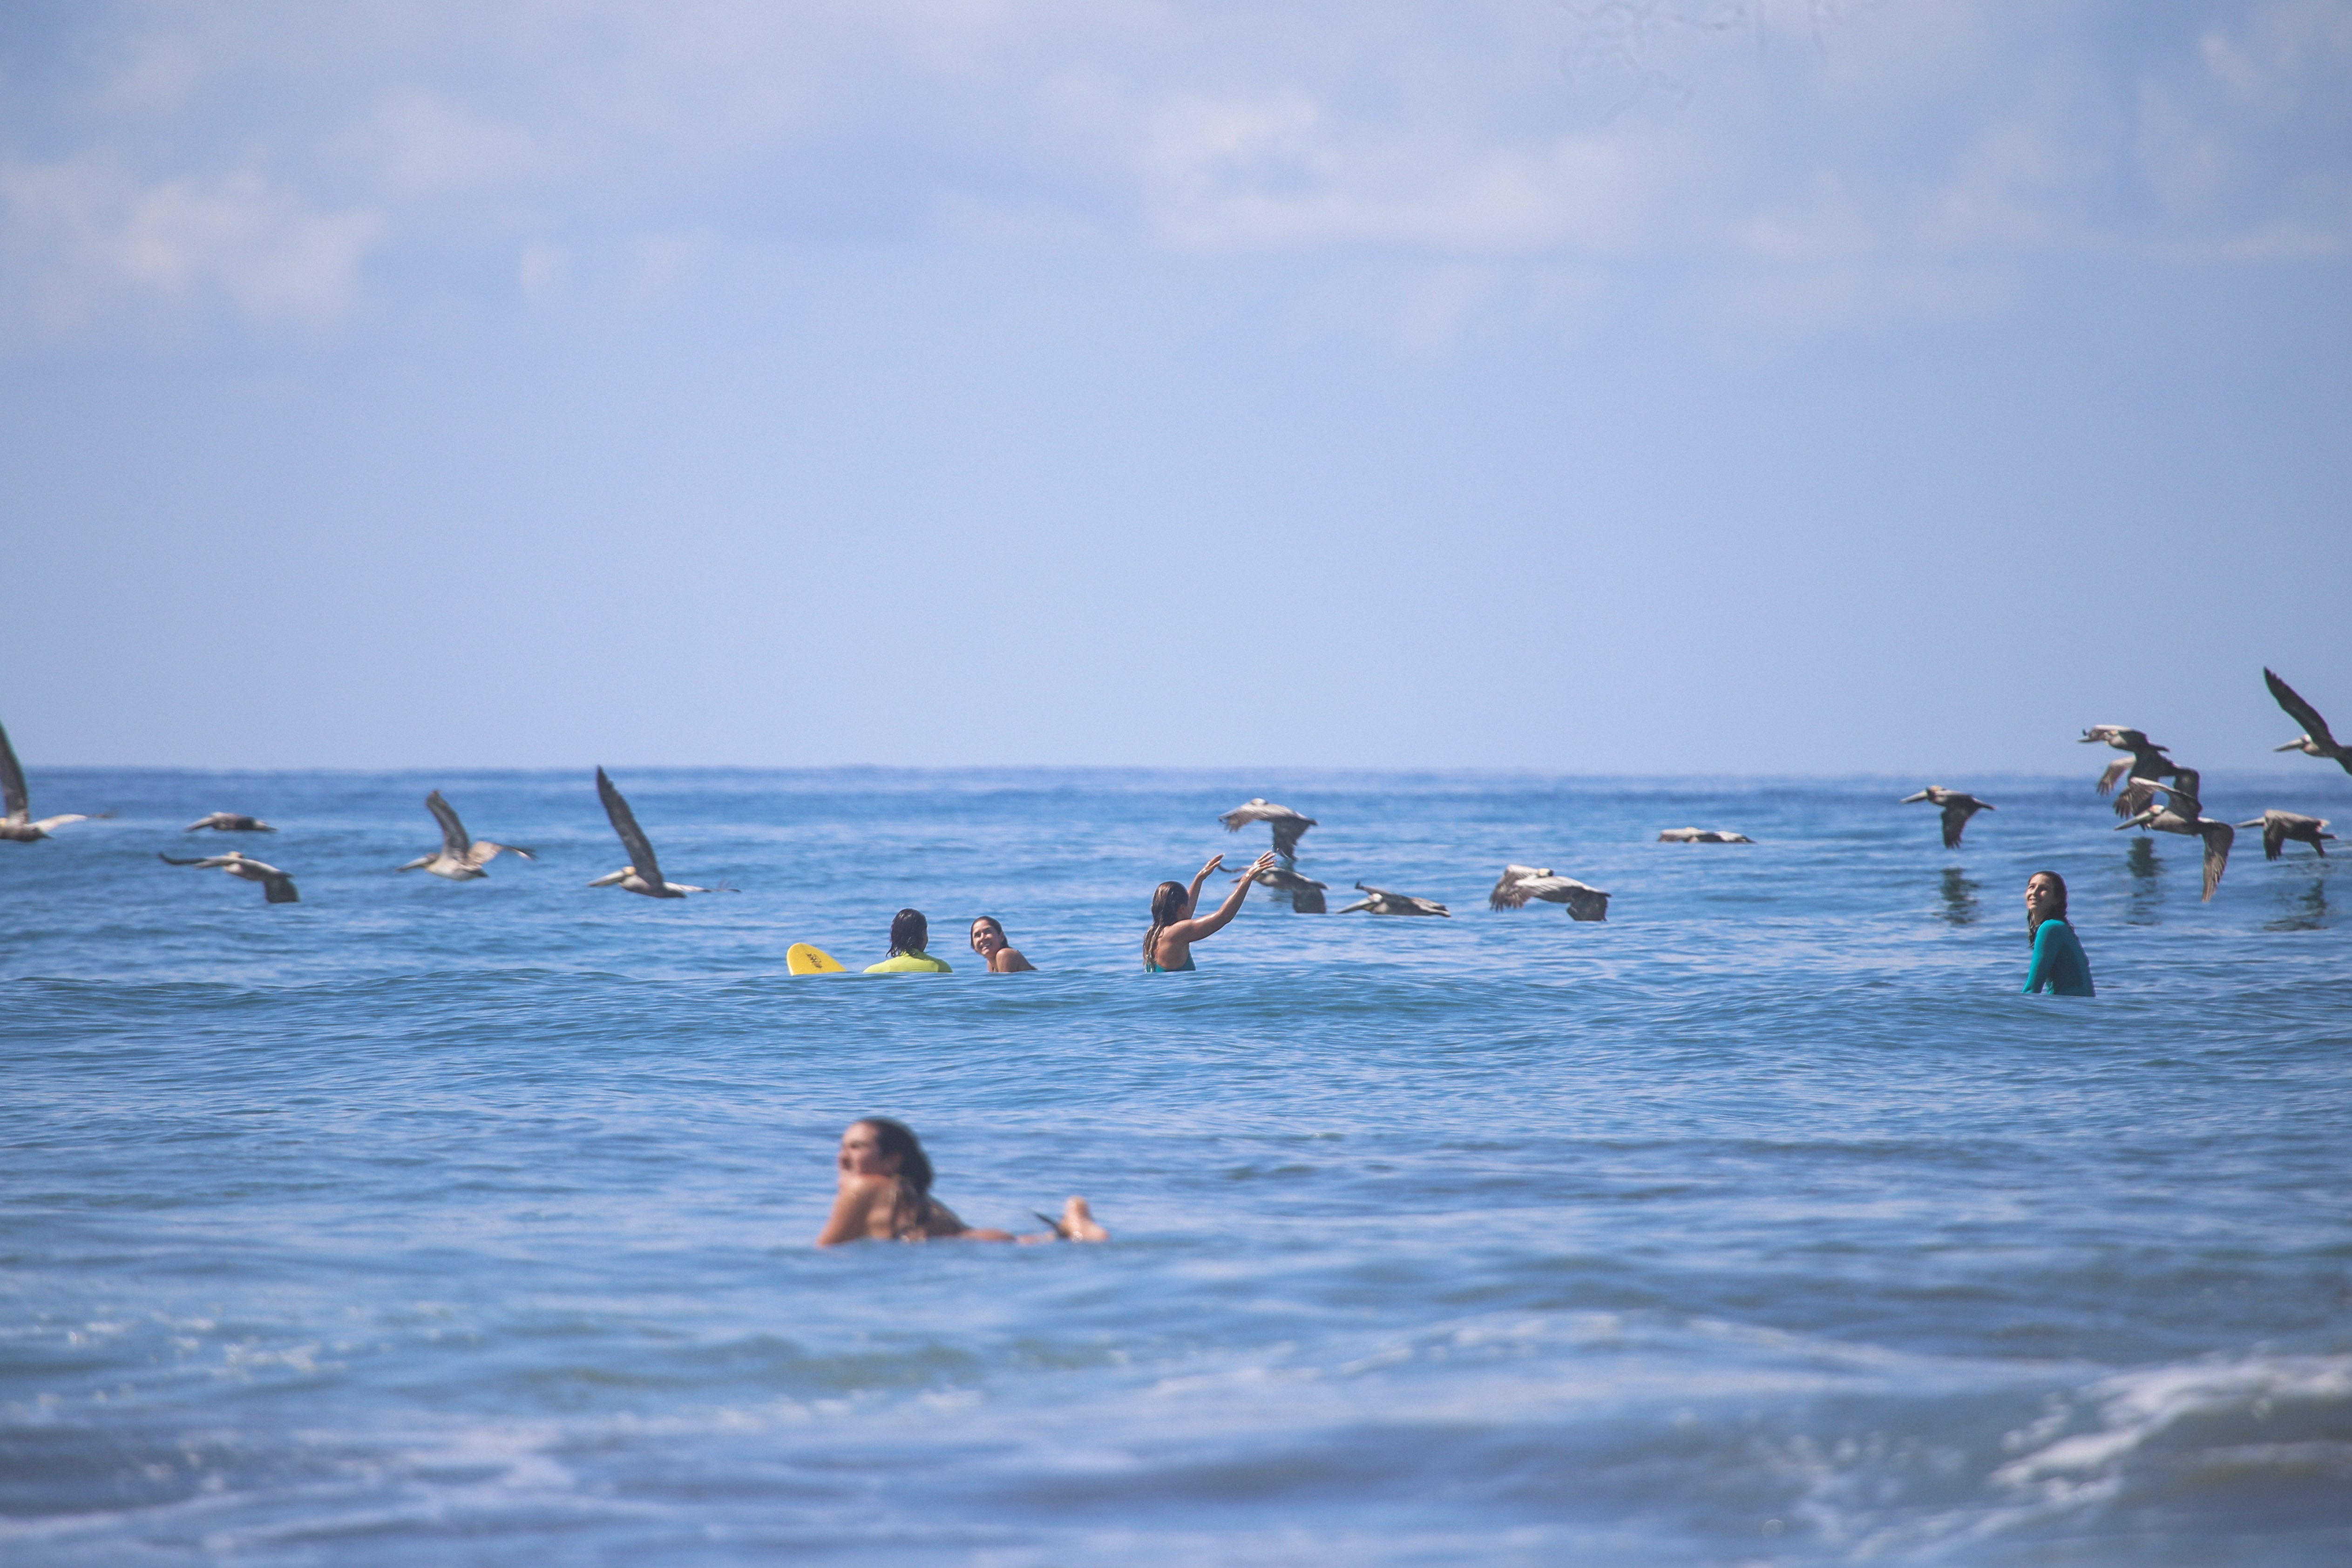 las chicas surfing in Pavones Costa Rica in a Dkoko surf trip